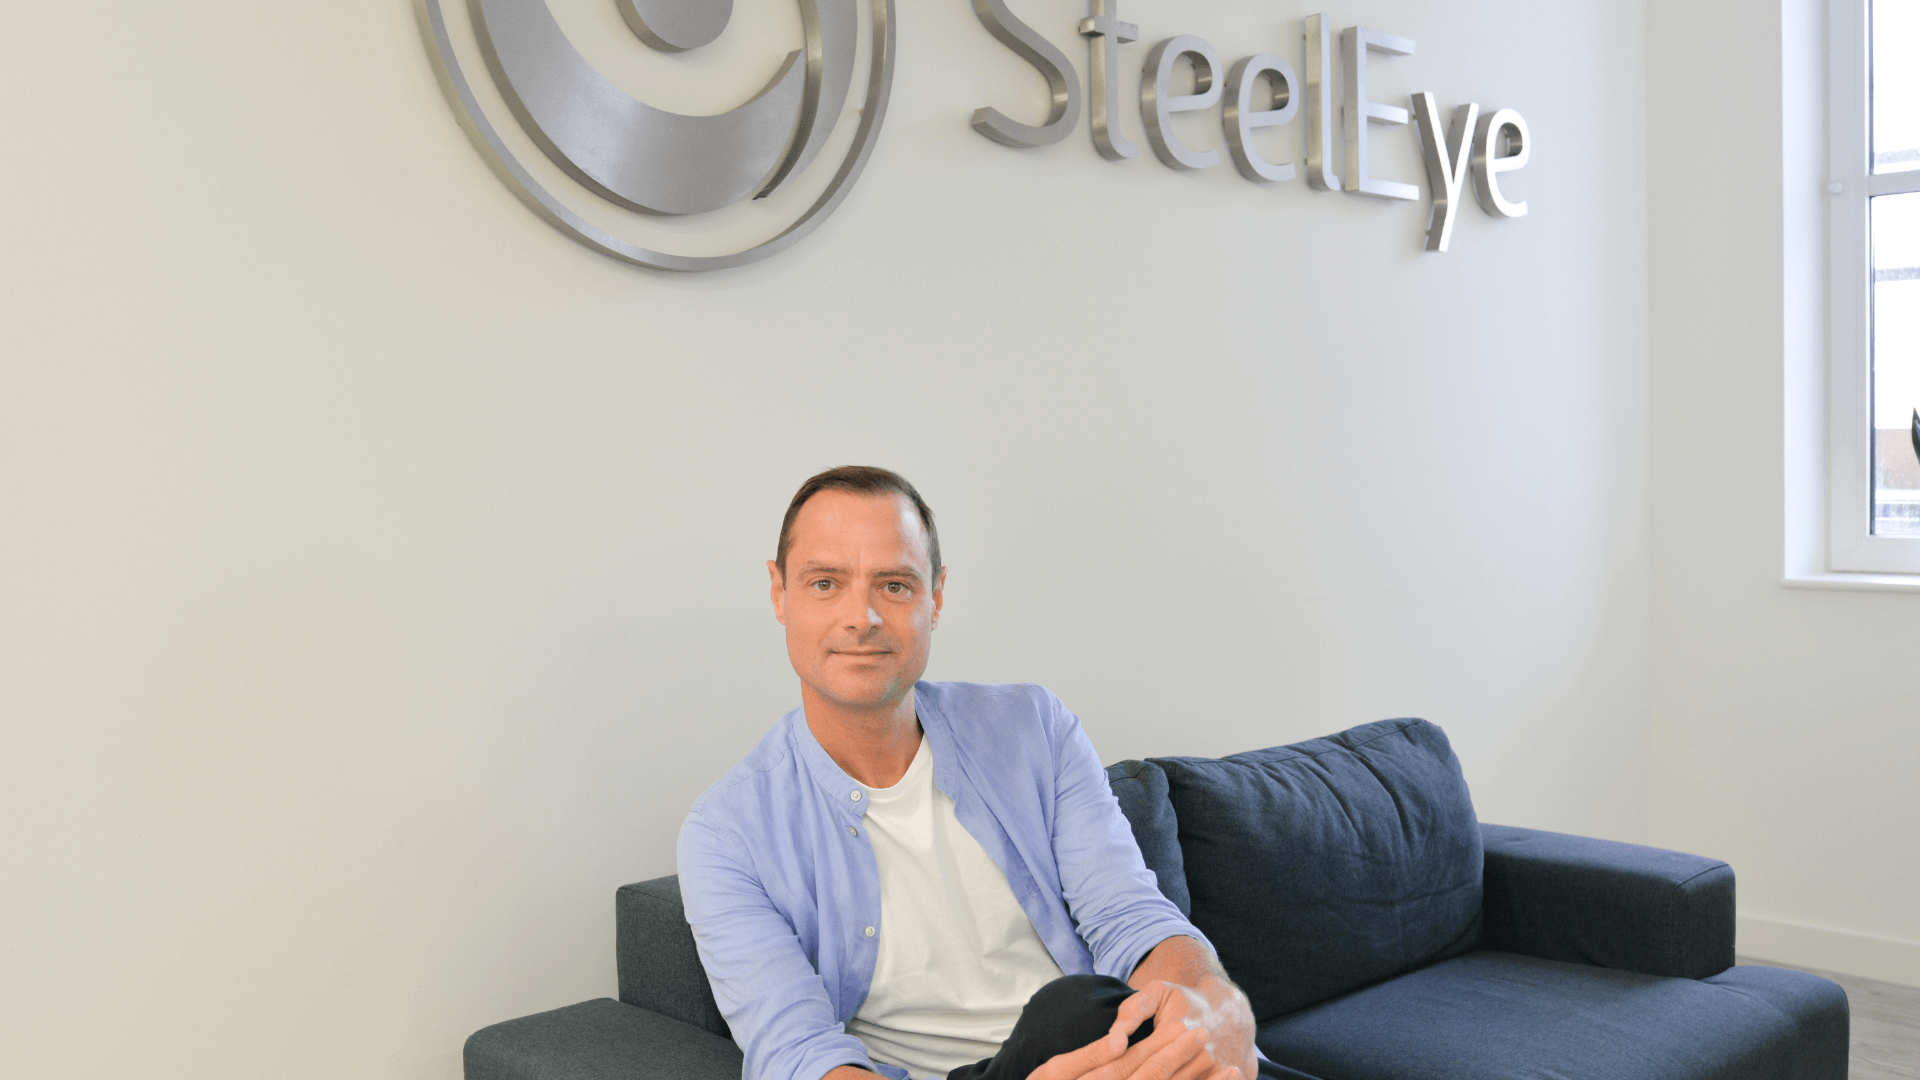 Interview: Matt Smith on SteelEye’s $21M Series B funding